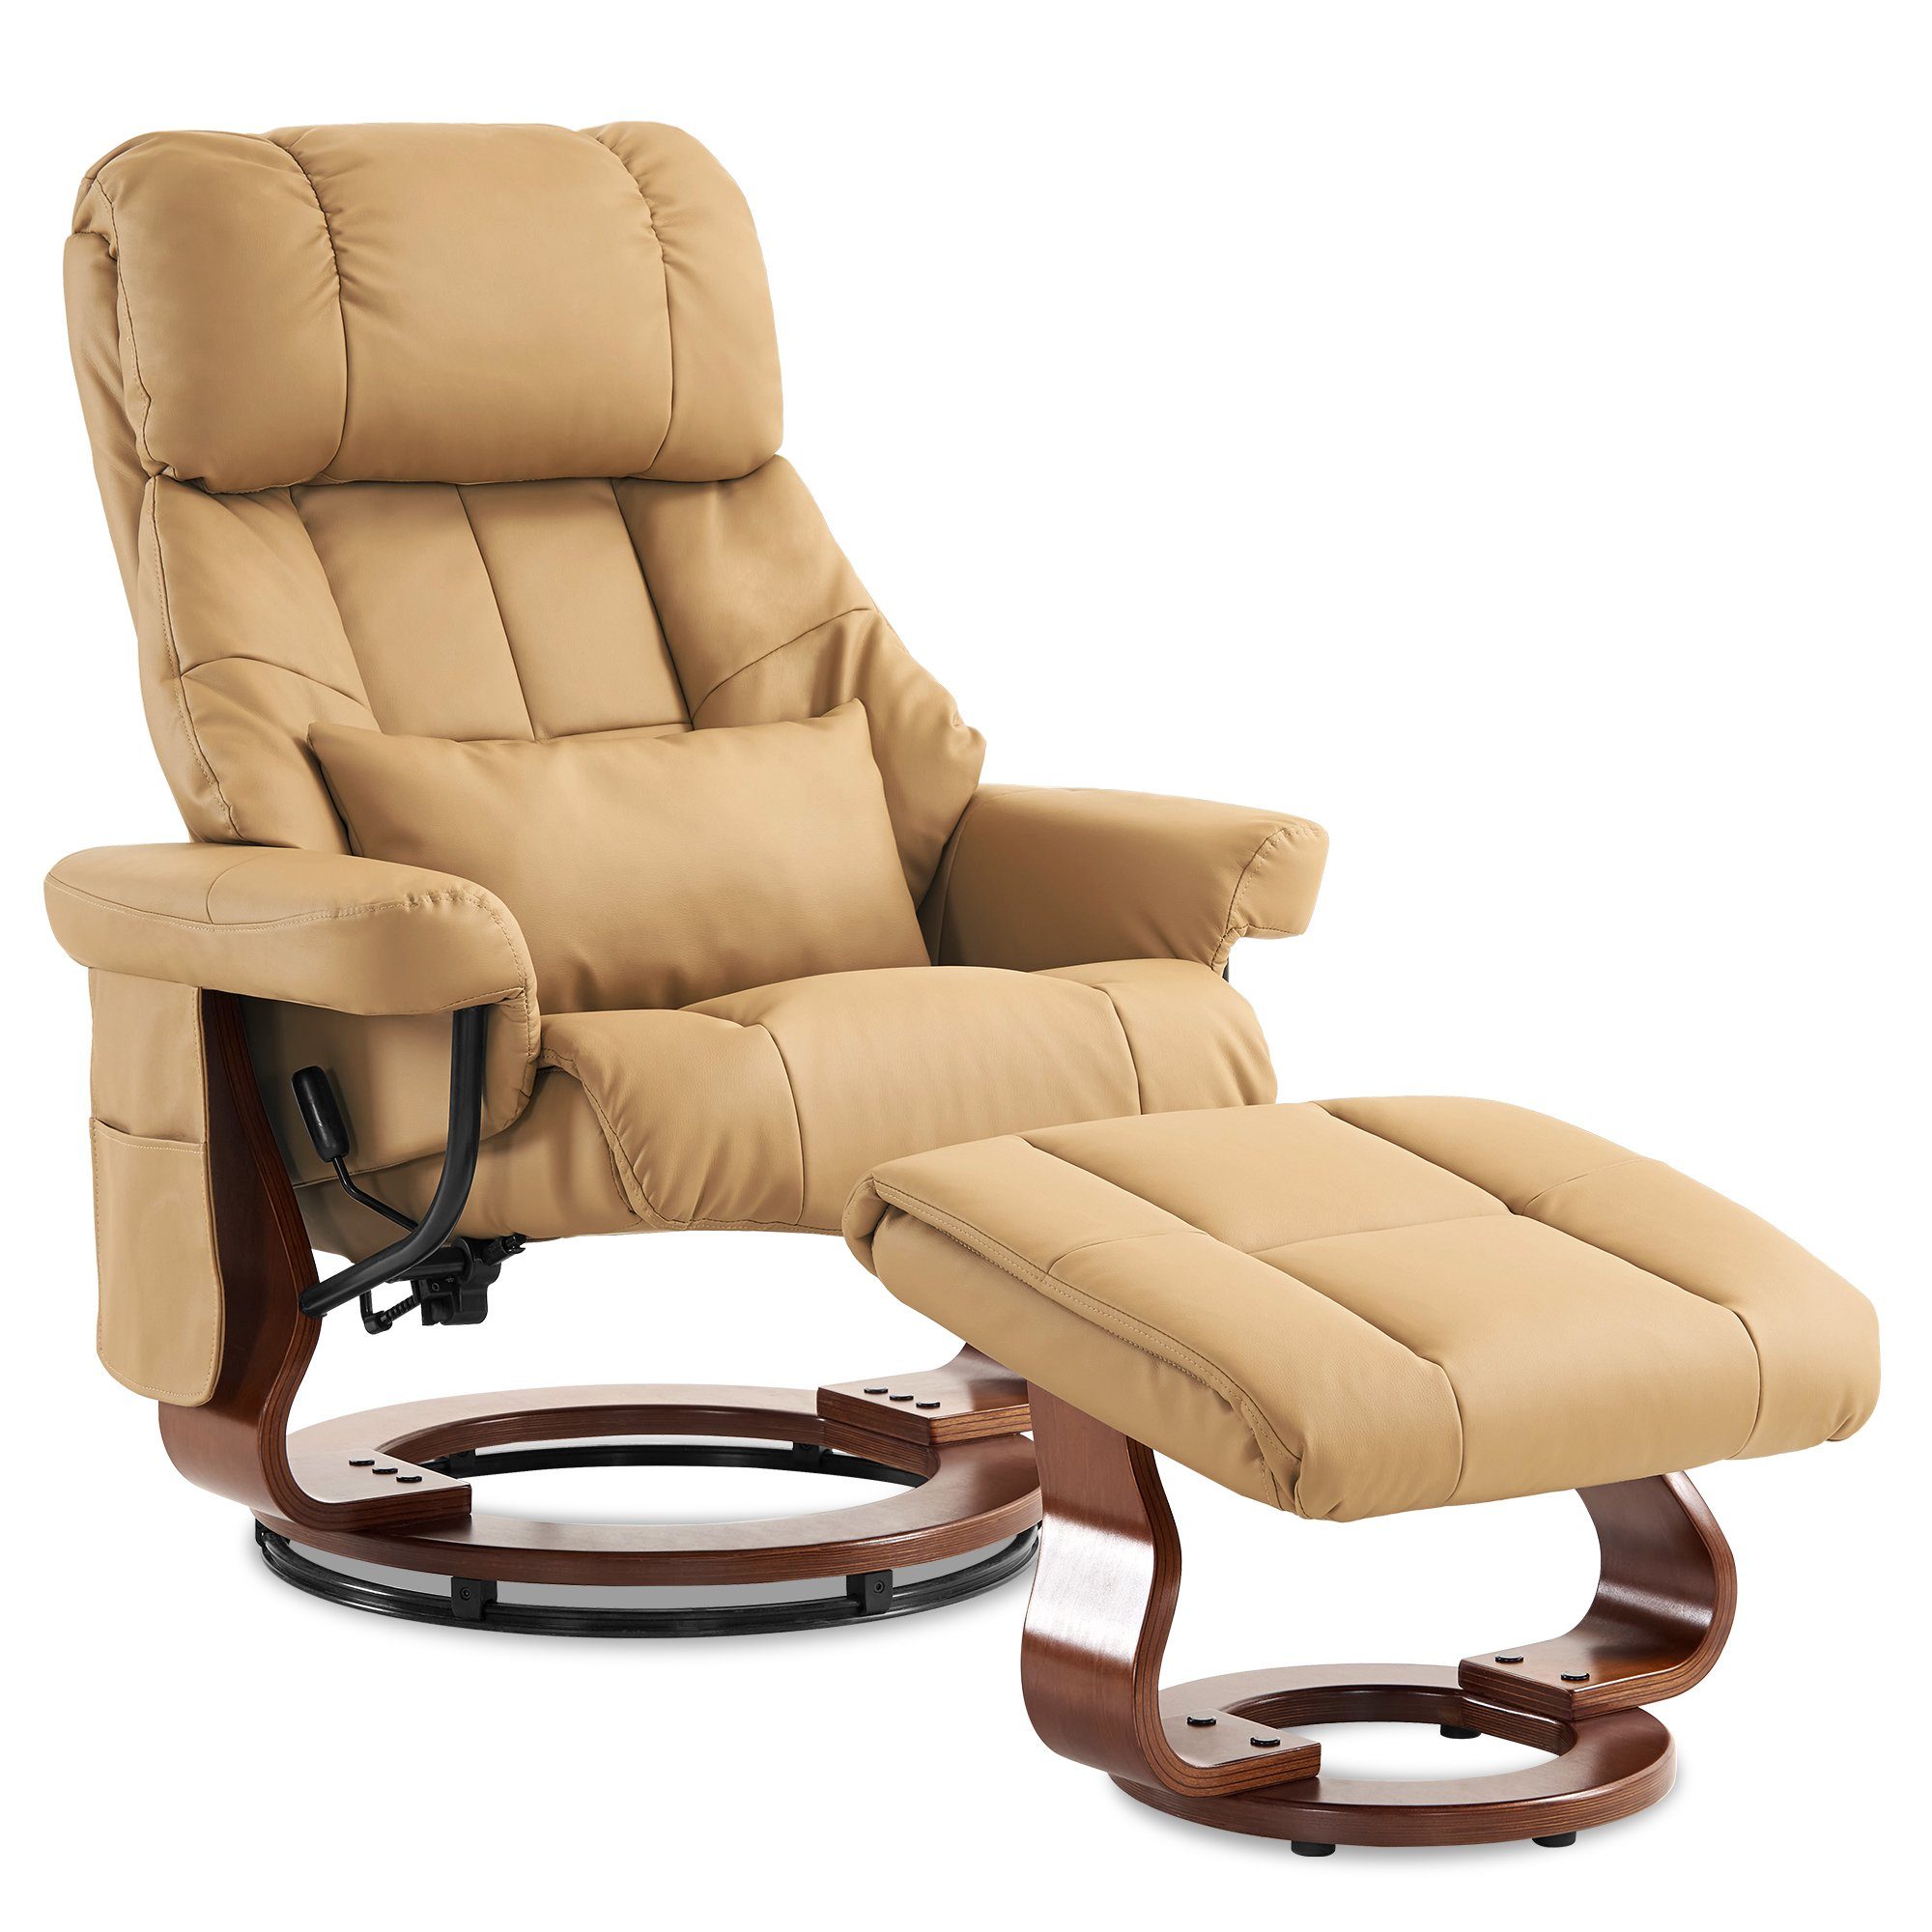 MCombo Relaxsessel MCombo Massagesessel mit Hocker 9068, 360°drehbarer Relaxsessel mit Liegefunktion Gelbbeige